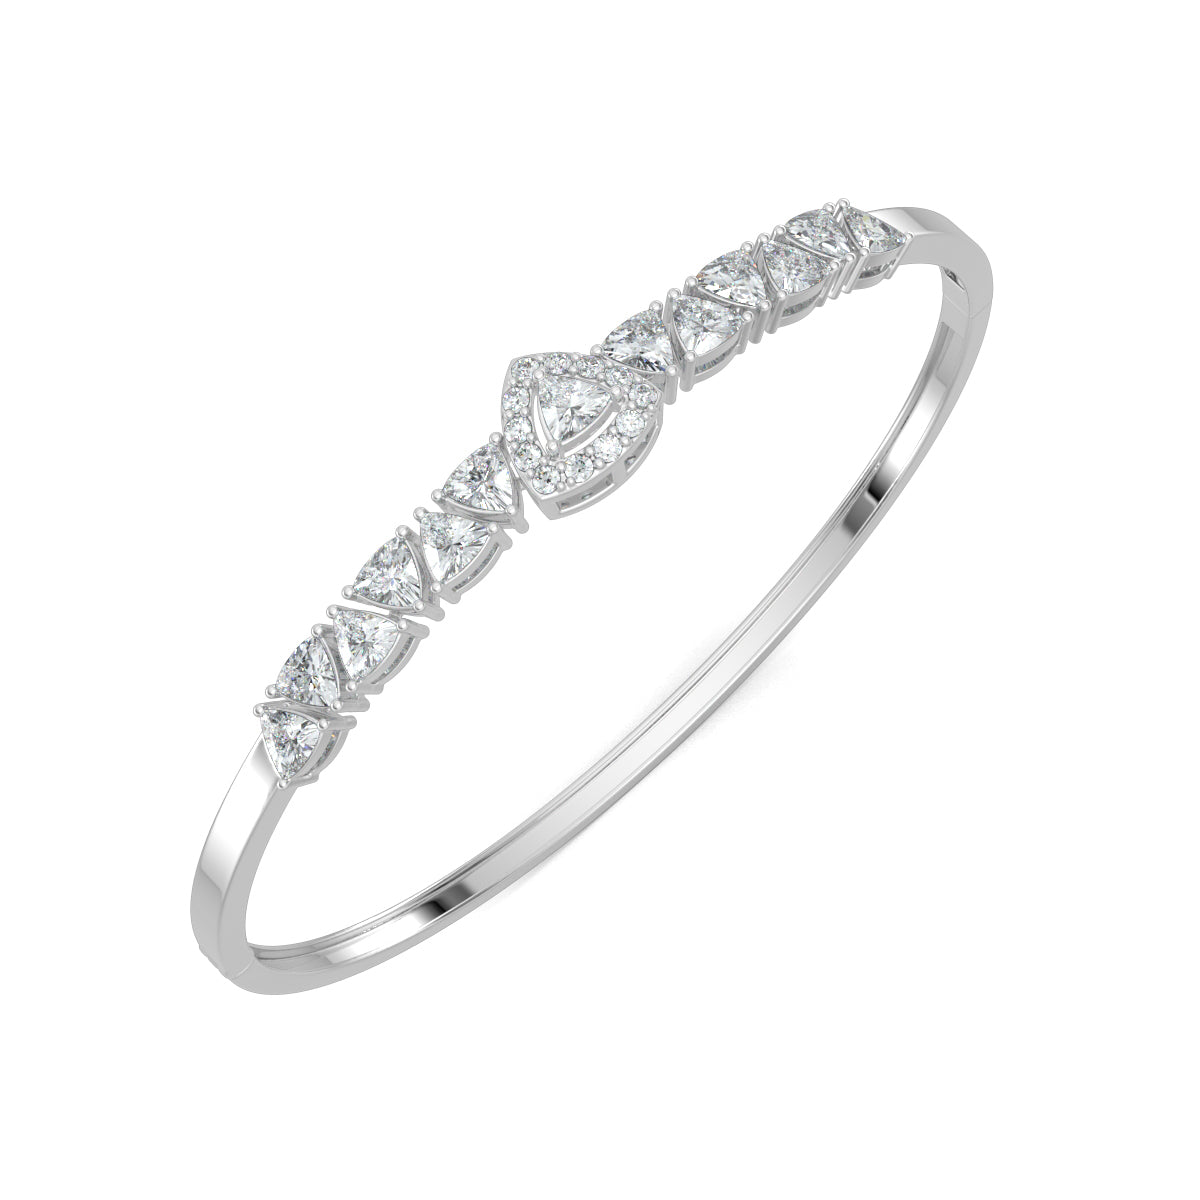 White Gold, Diamond Bracelet, Natural diamond bracelet, Lab-grown diamond bracelet, Oval diamond bracelet, Trillion-cut diamond bracelet, Pave-set diamond bracelet, Ethical diamond jewelry